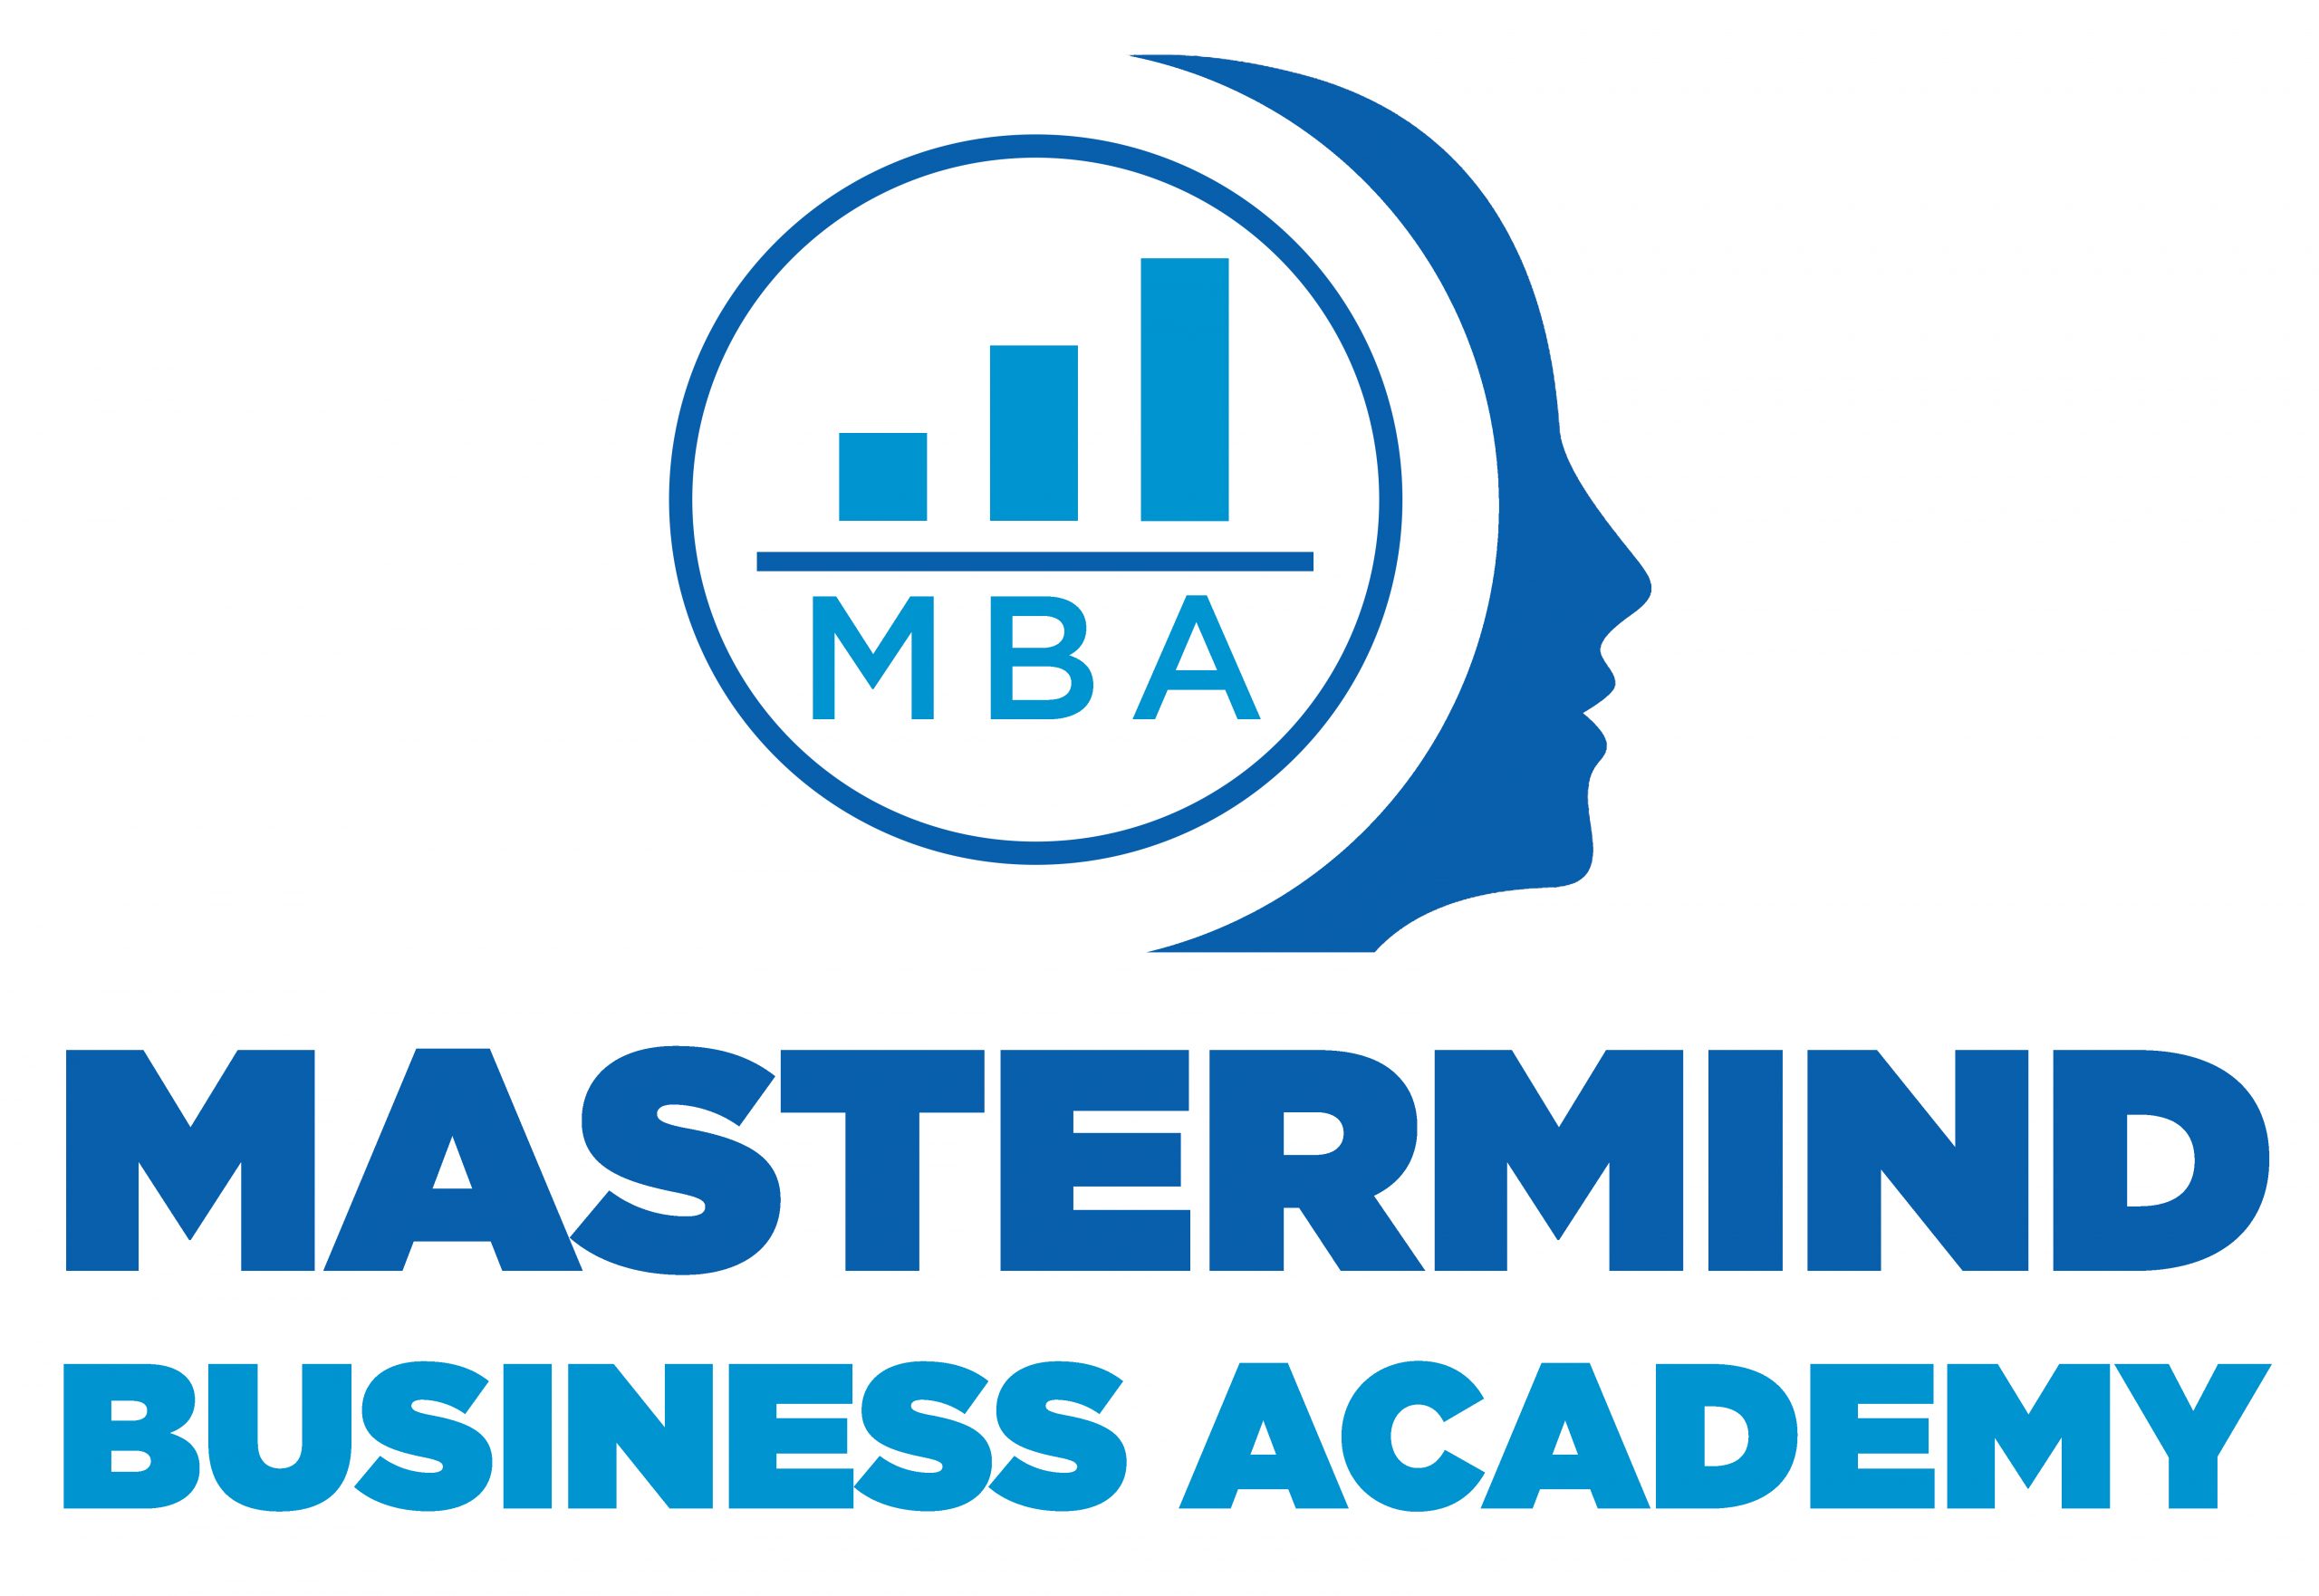 Mastermind Business Academy